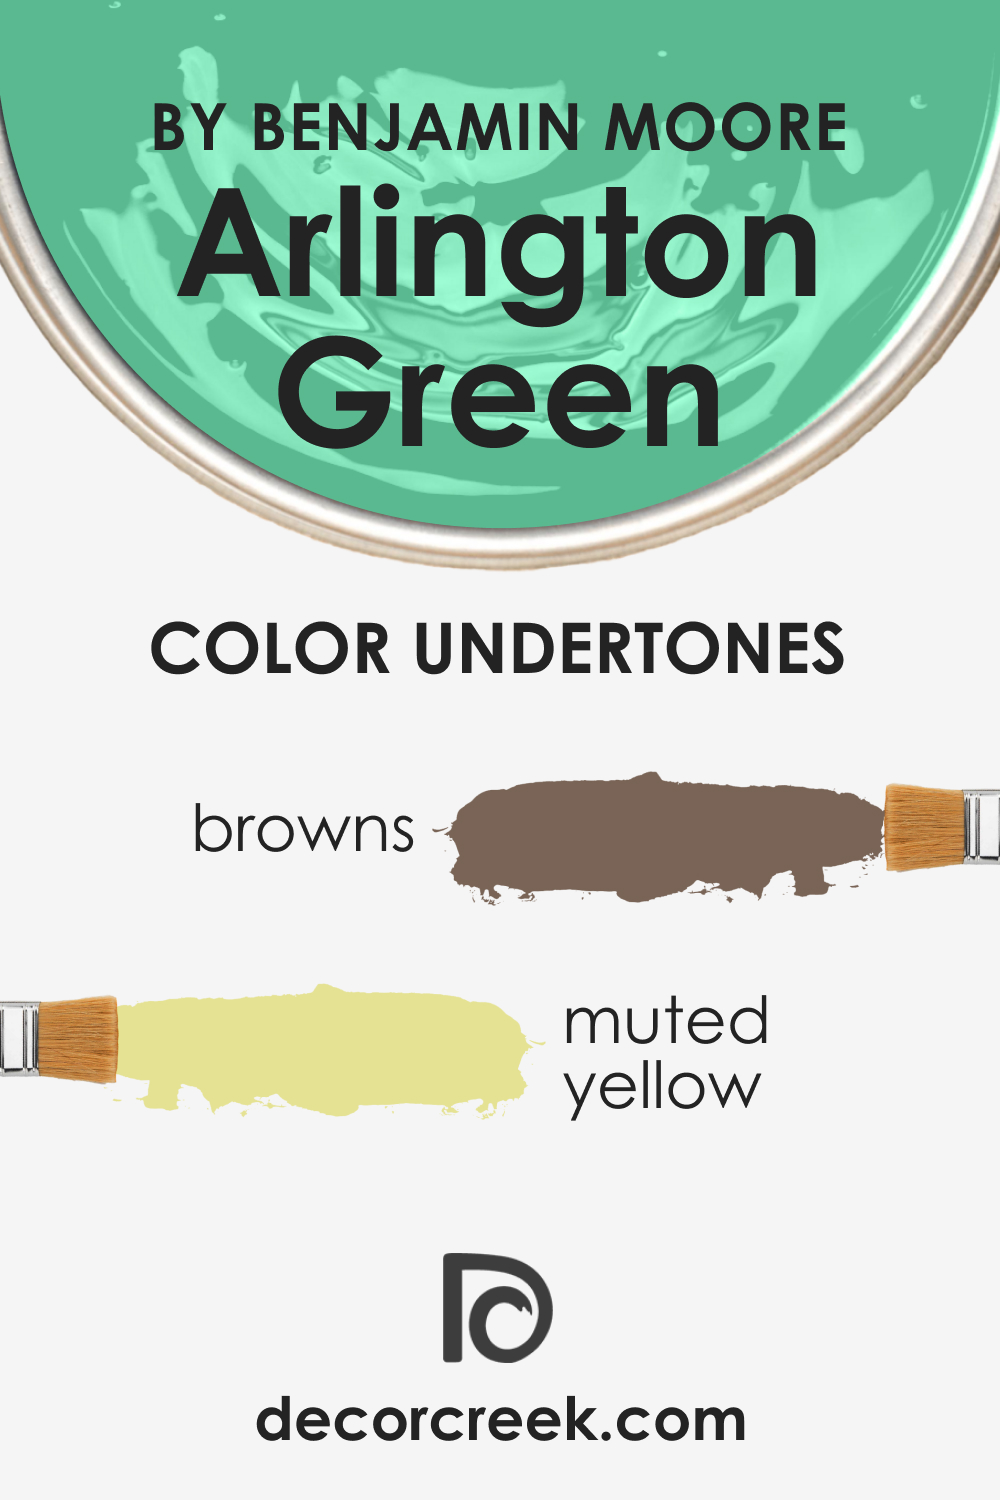 Undertones of Arlington Green 580